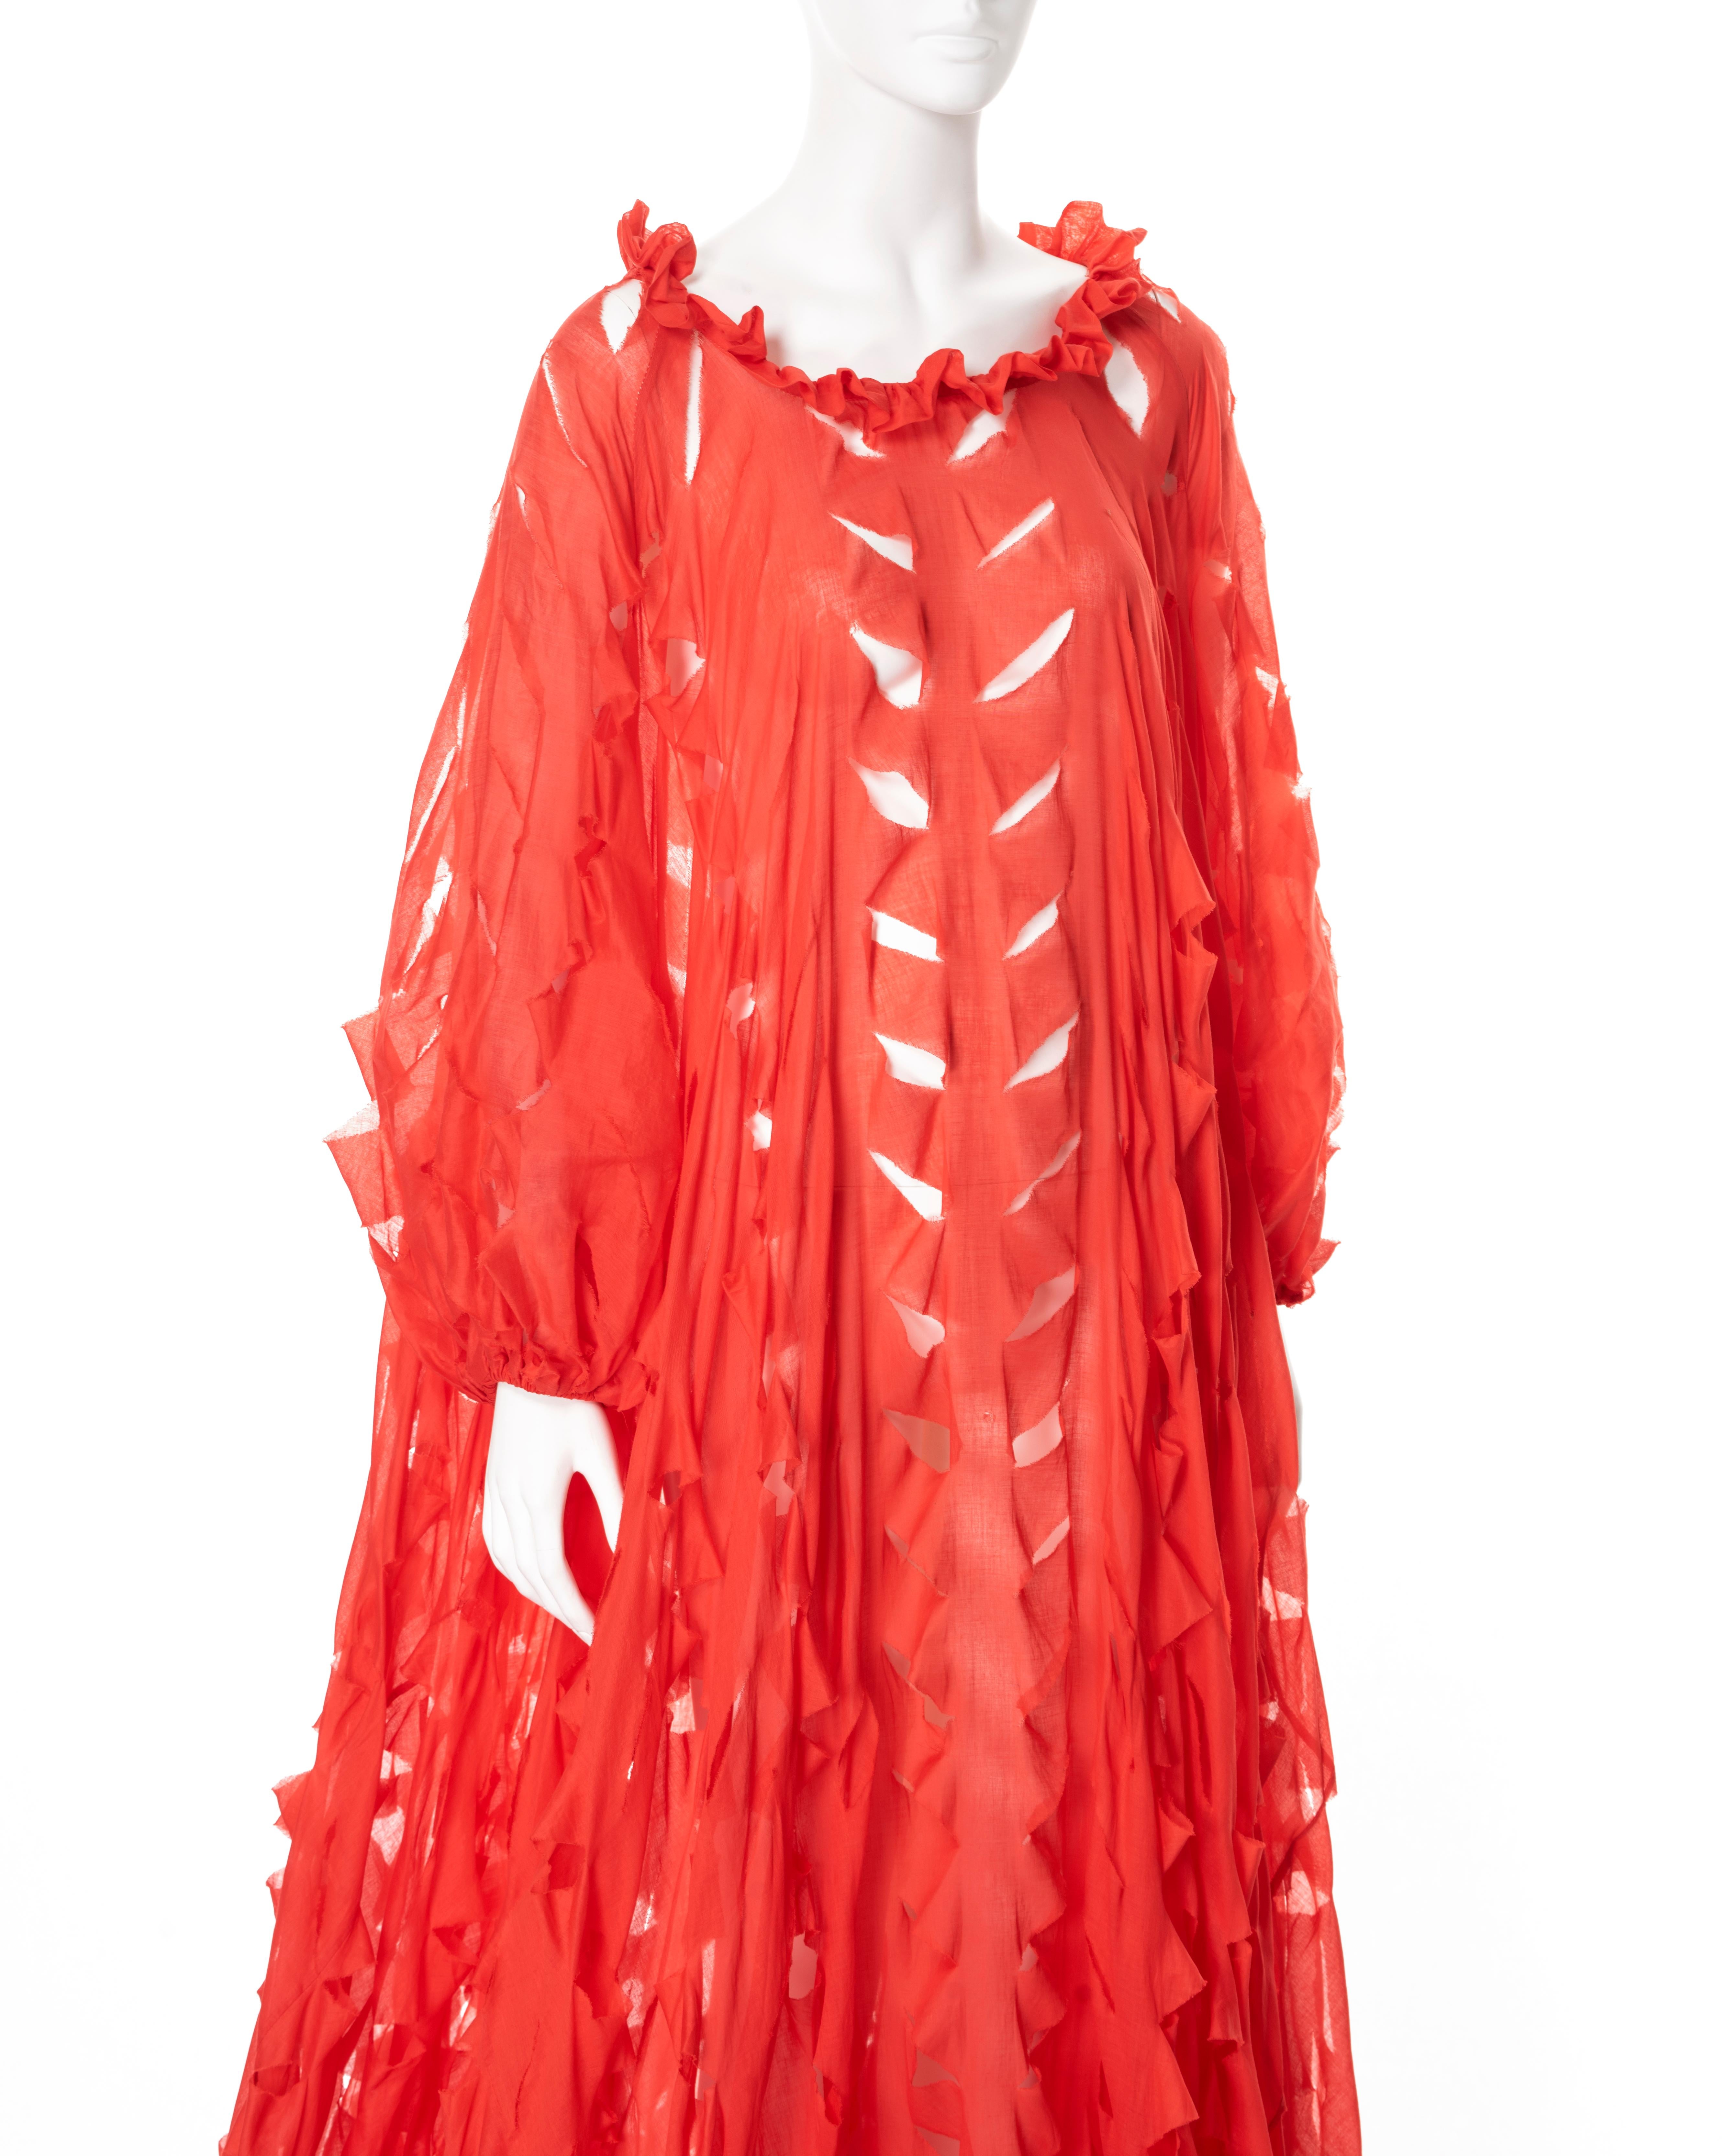 Vivienne Westwood hand-cut red cotton circle-cut dress, ss 1991 For Sale 2